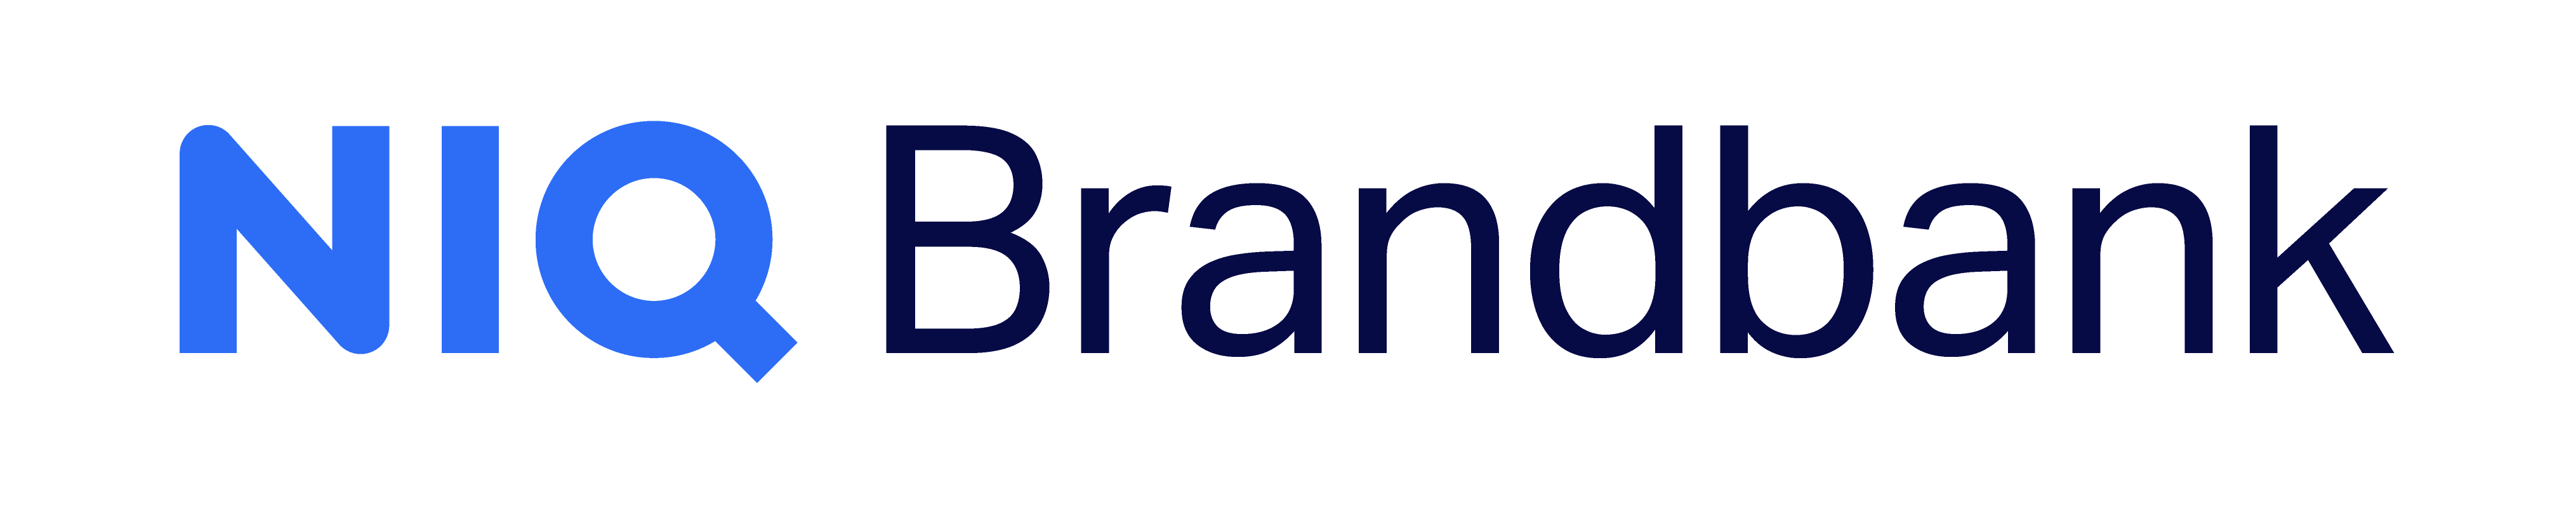 NIQ Brandbank NIQ Brandbank Logo Blues Transparent